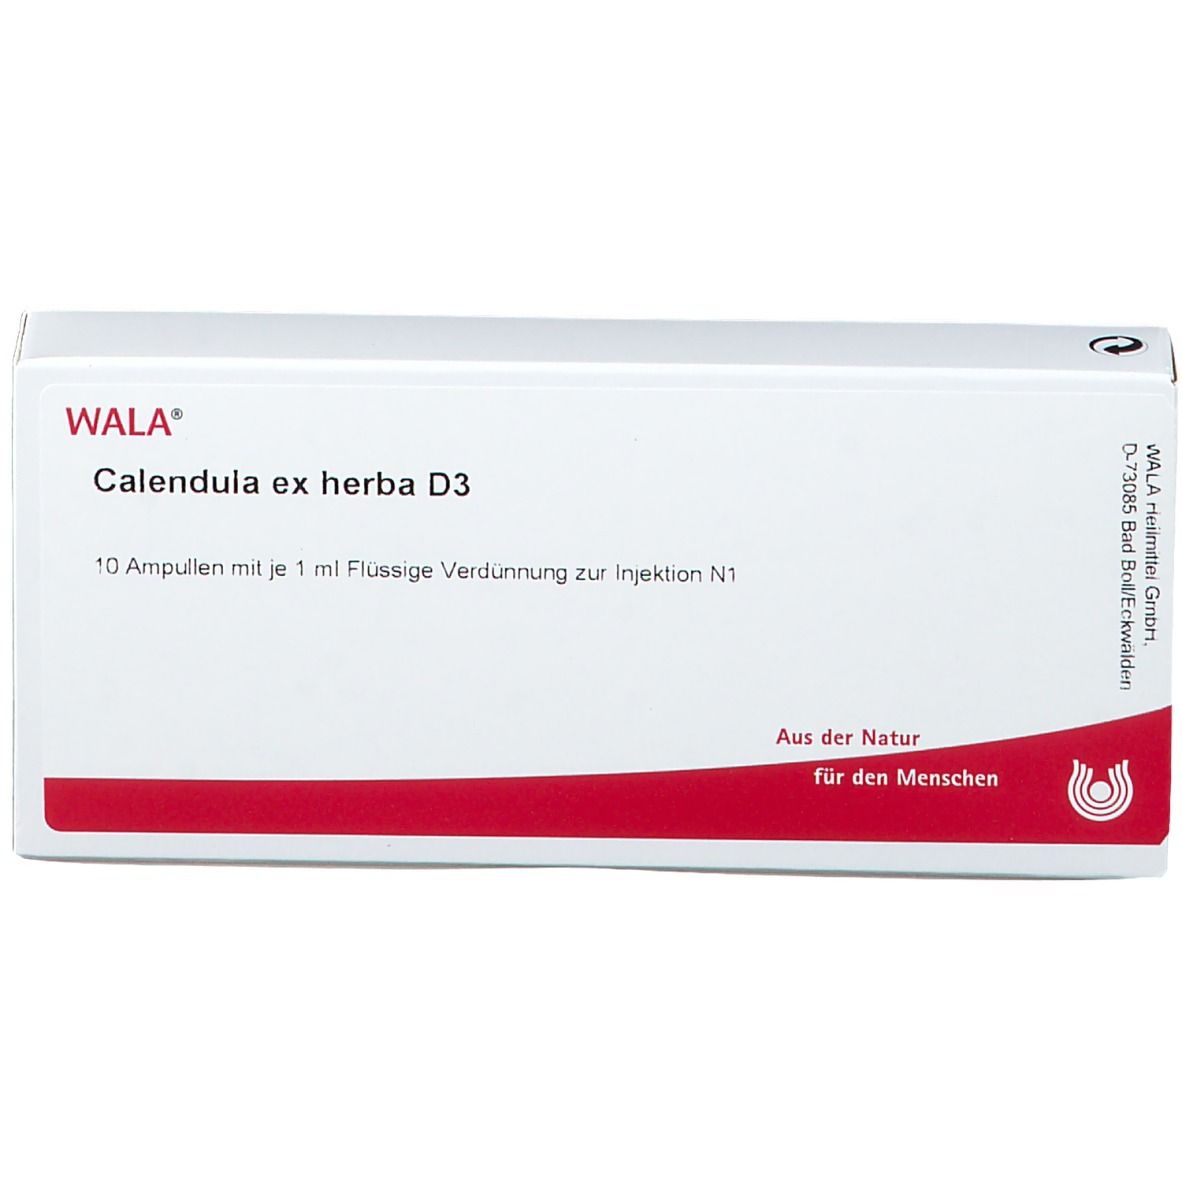 WALA® Calendula ex herba D 3